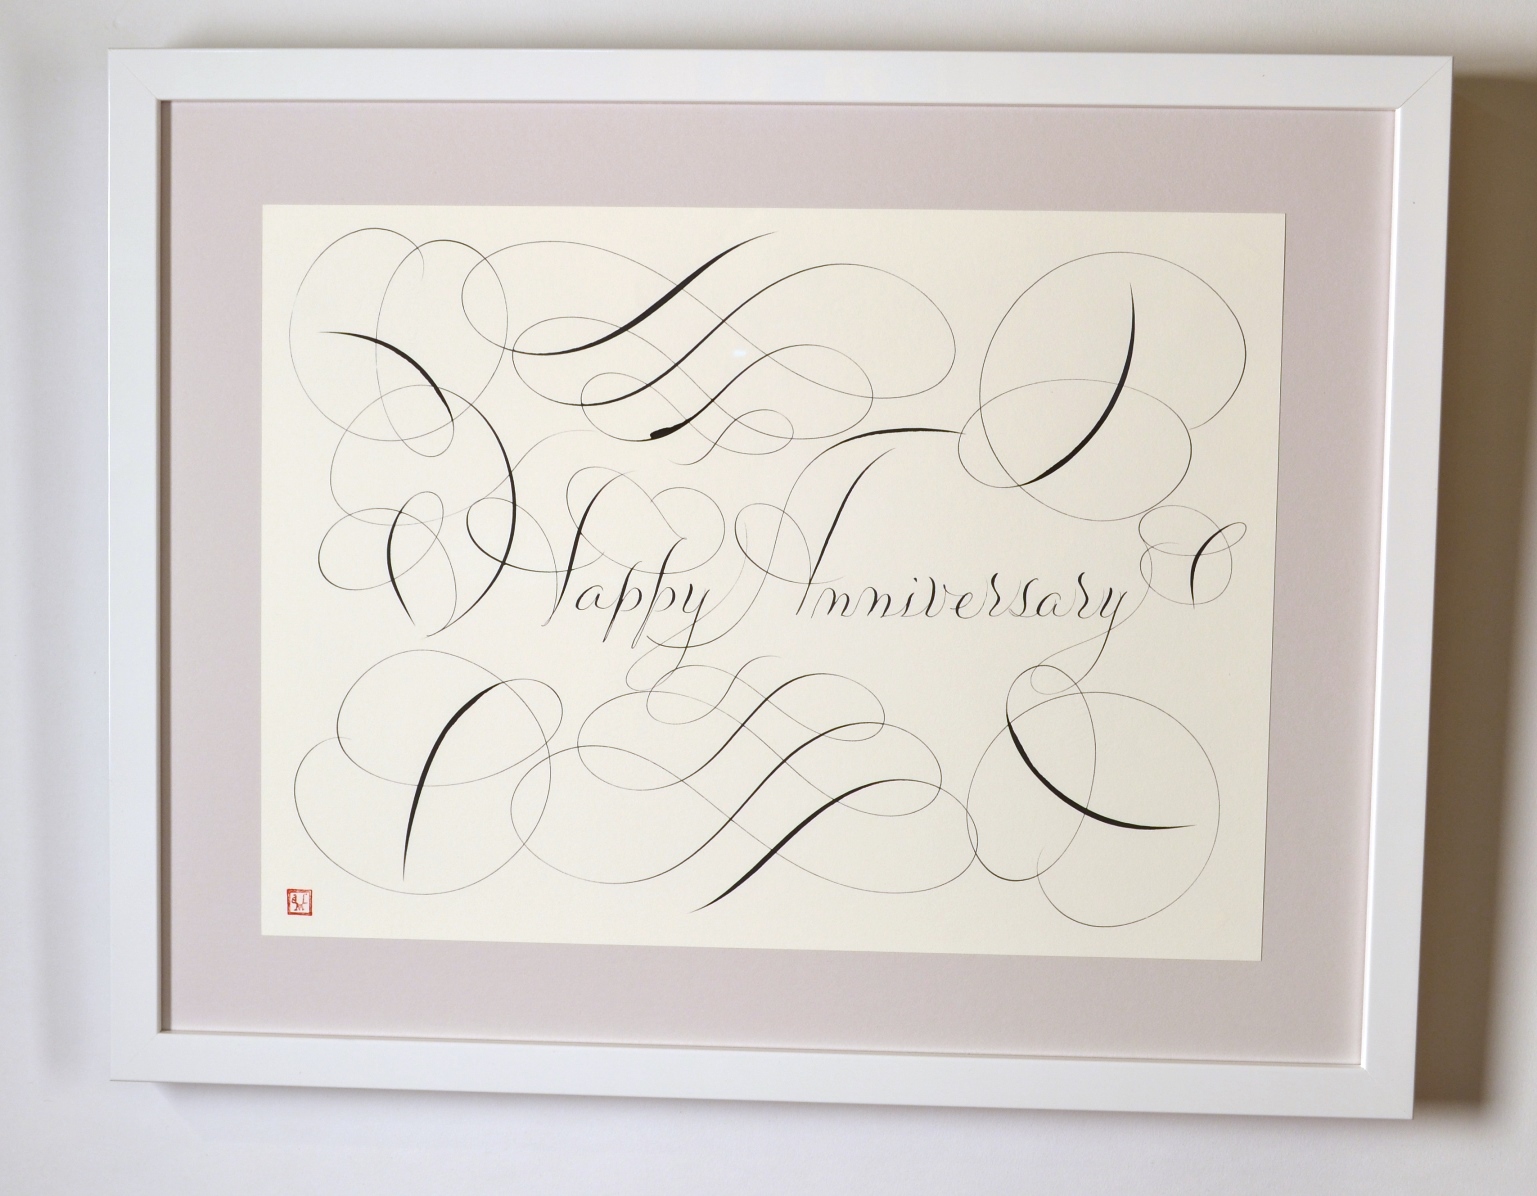 "Calligraphic Drawing, Happy Anniversary"